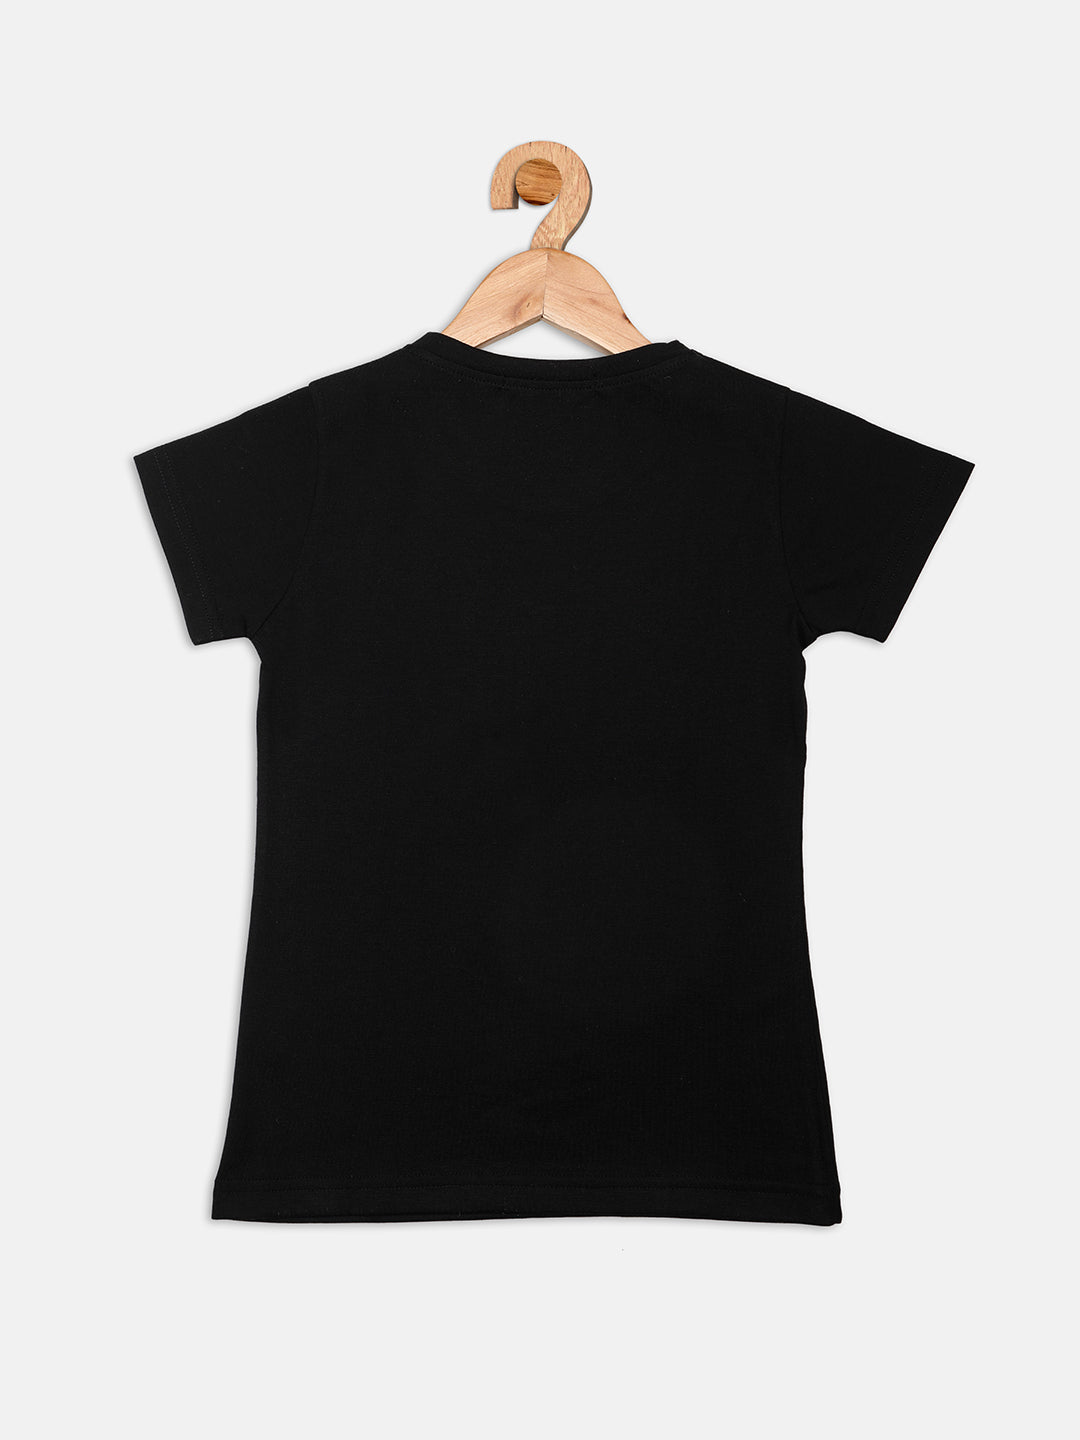 Nins Moda Half Sleeves Instigation Printed Top - Black